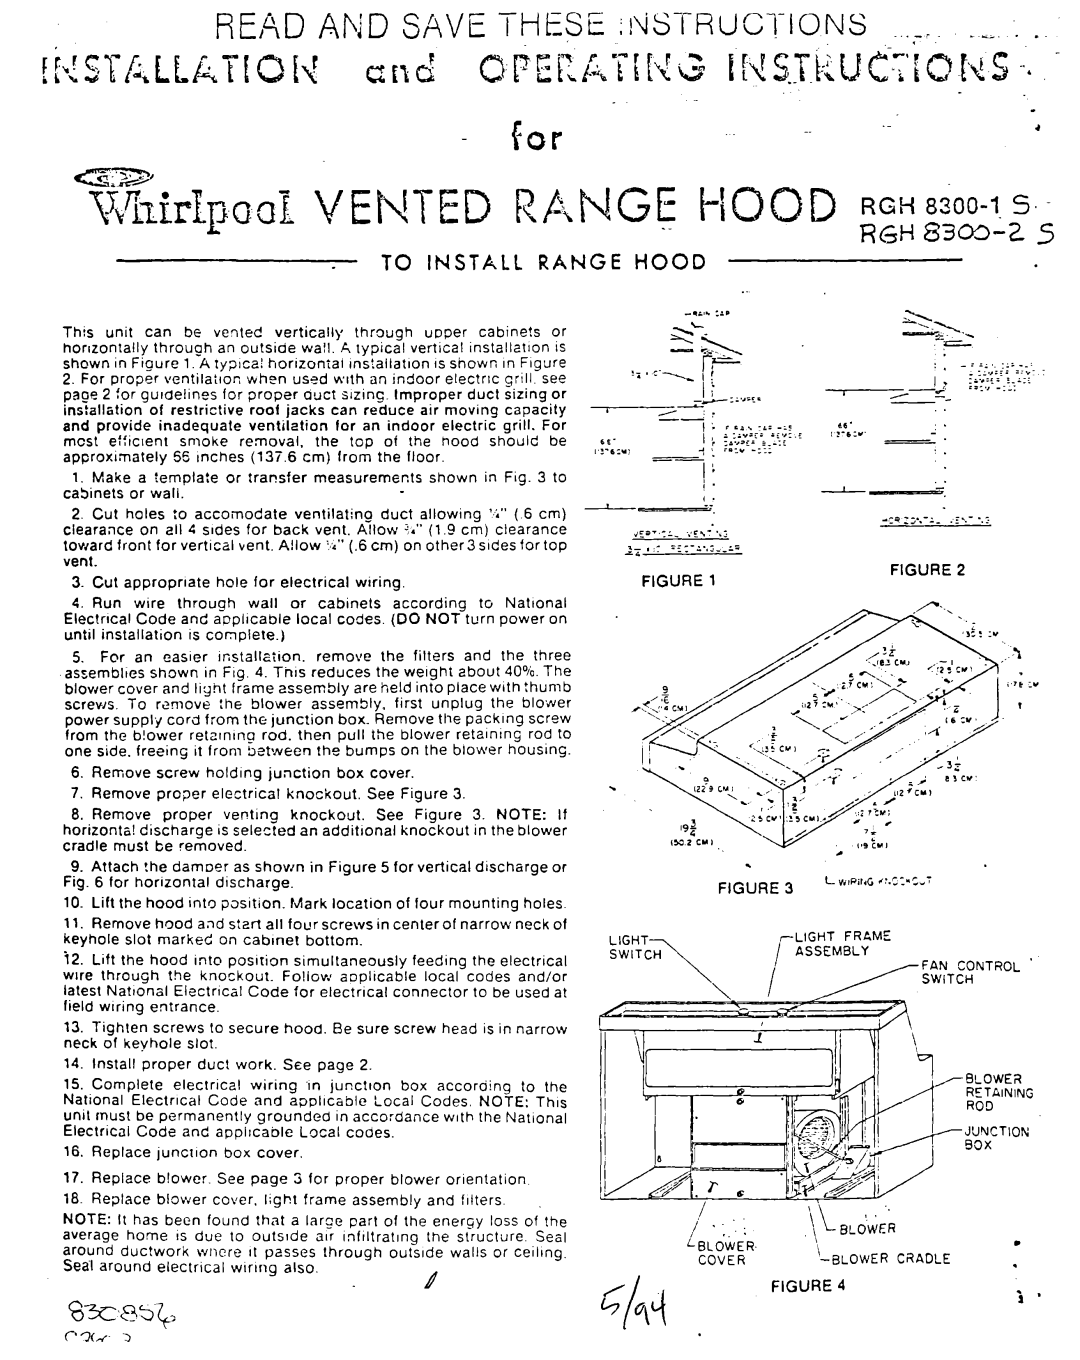 Whirlpool RGH 8300-1, RGH 8300-2 manual To Install Range Hood, RGH 8300-l % RGHt!S3m-25 